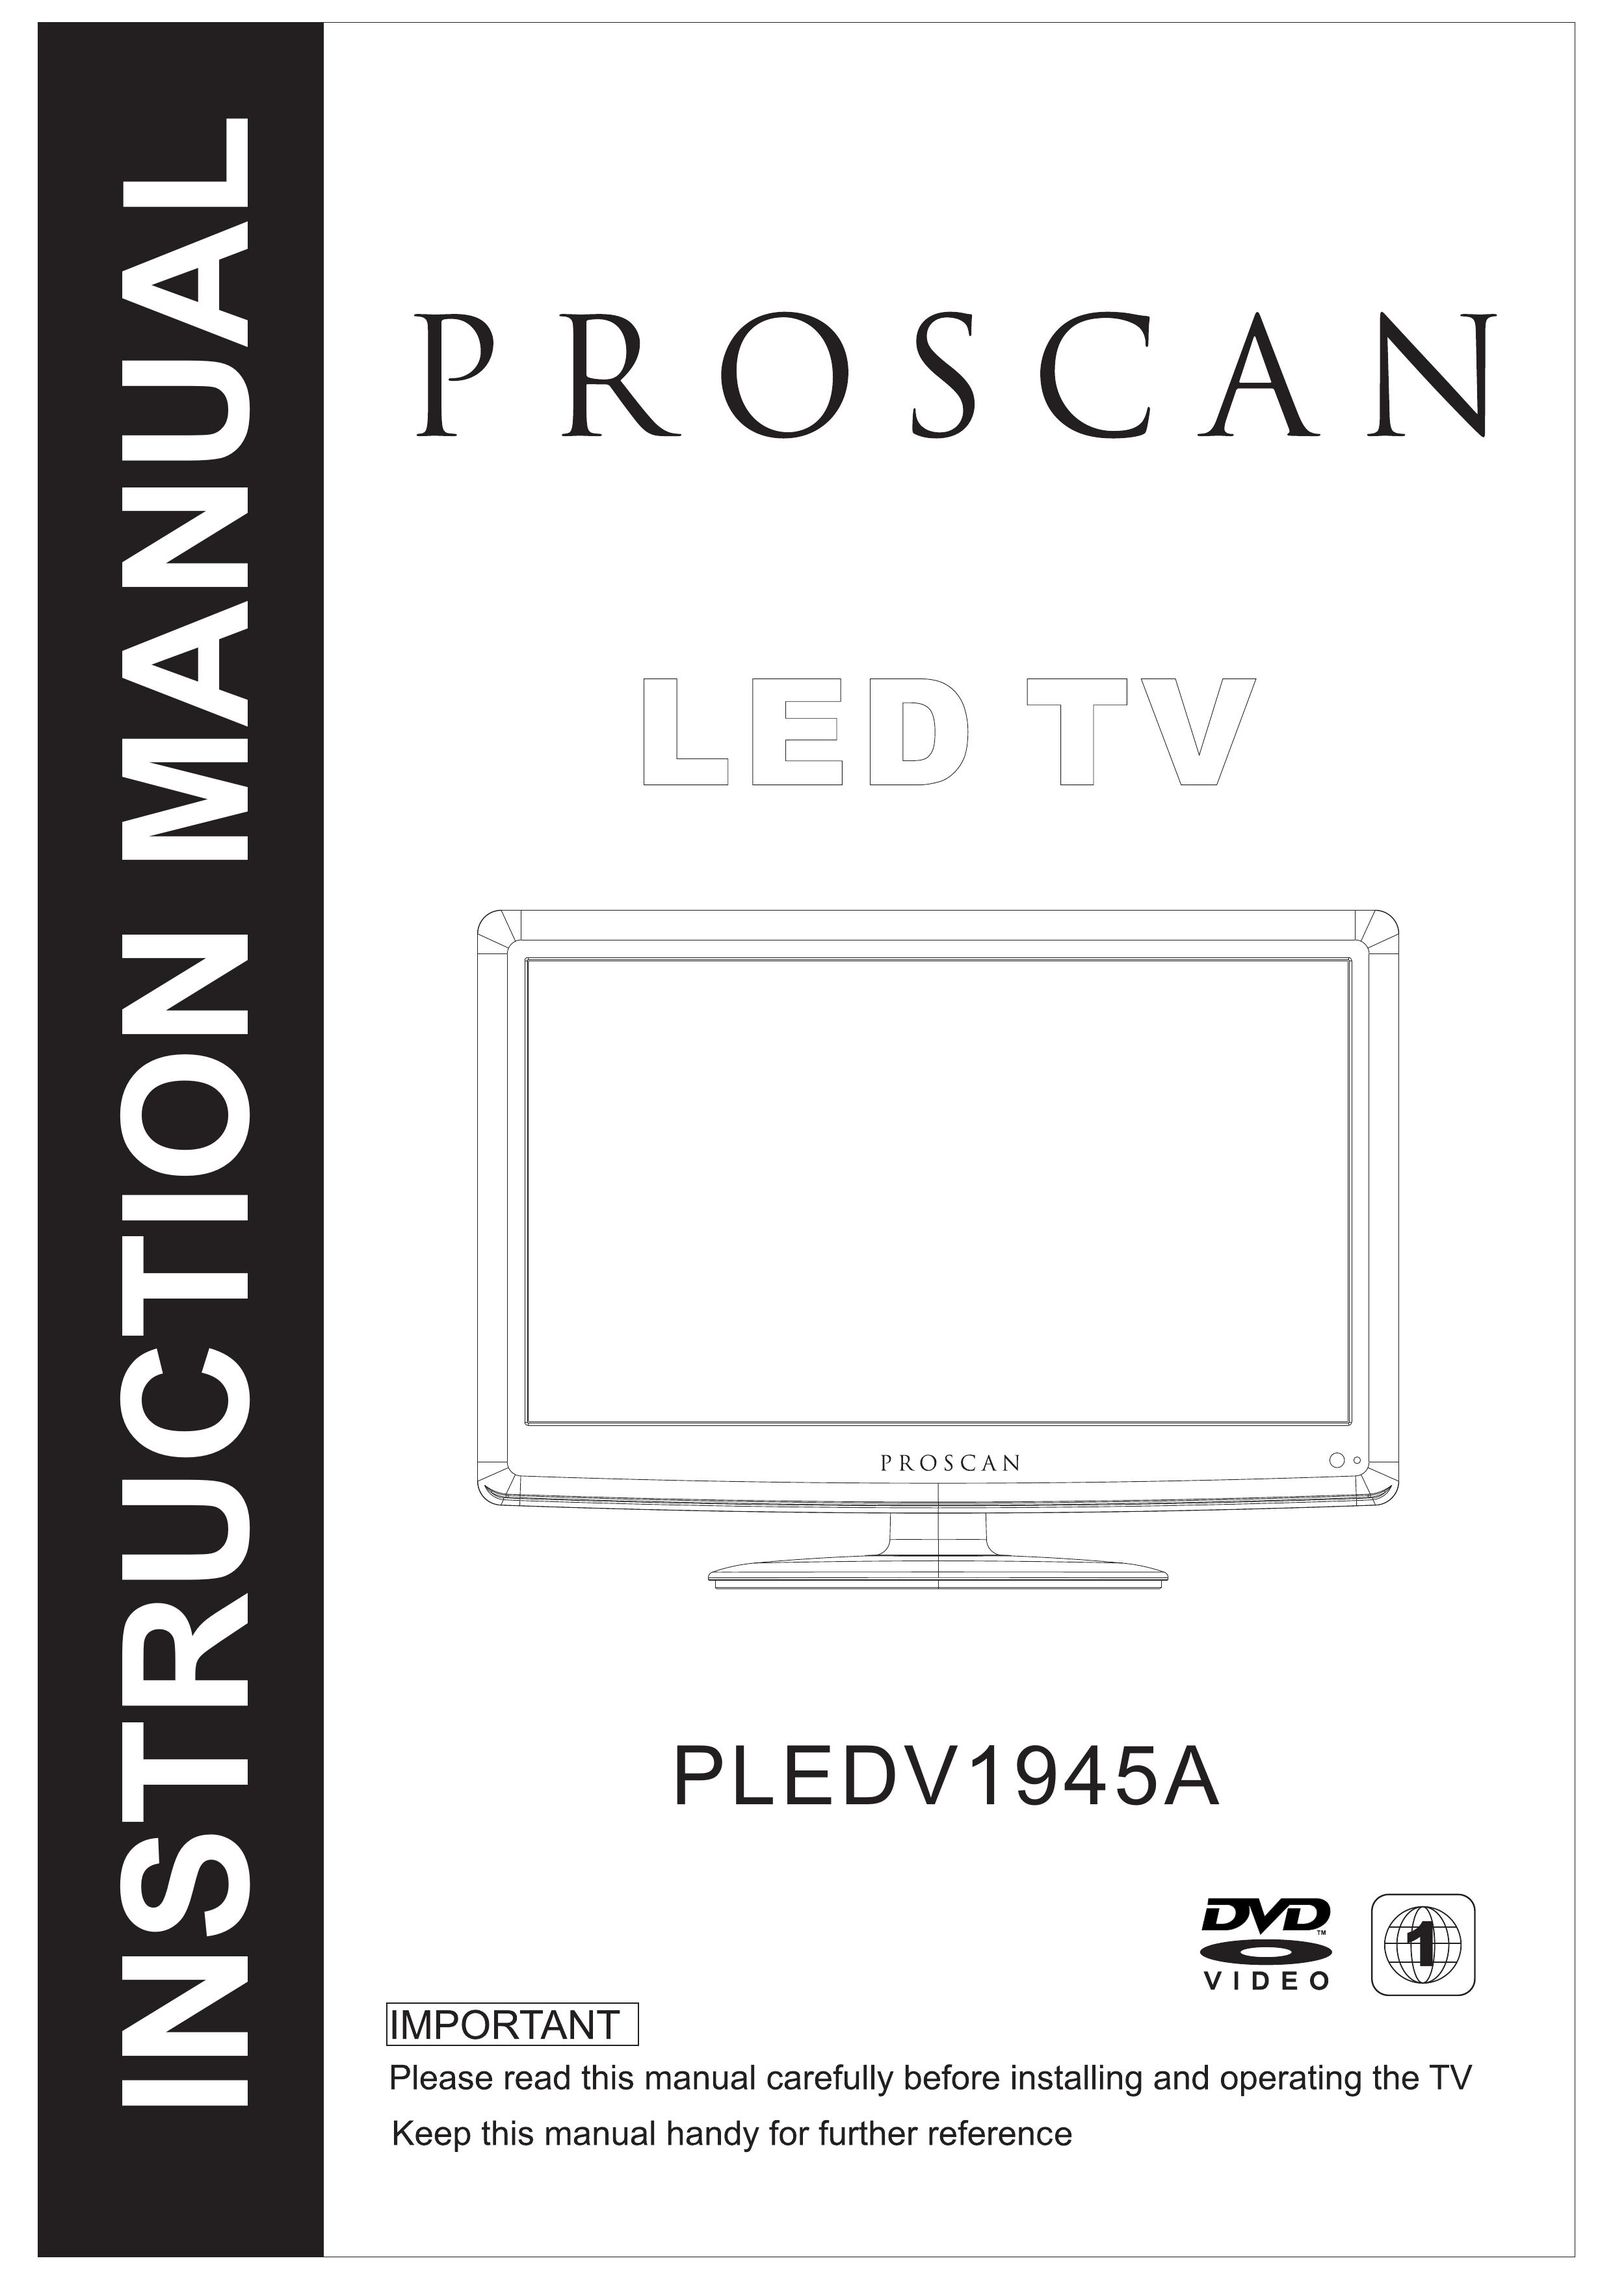 ProScan PLEDV1945A Flat Panel Television User Manual